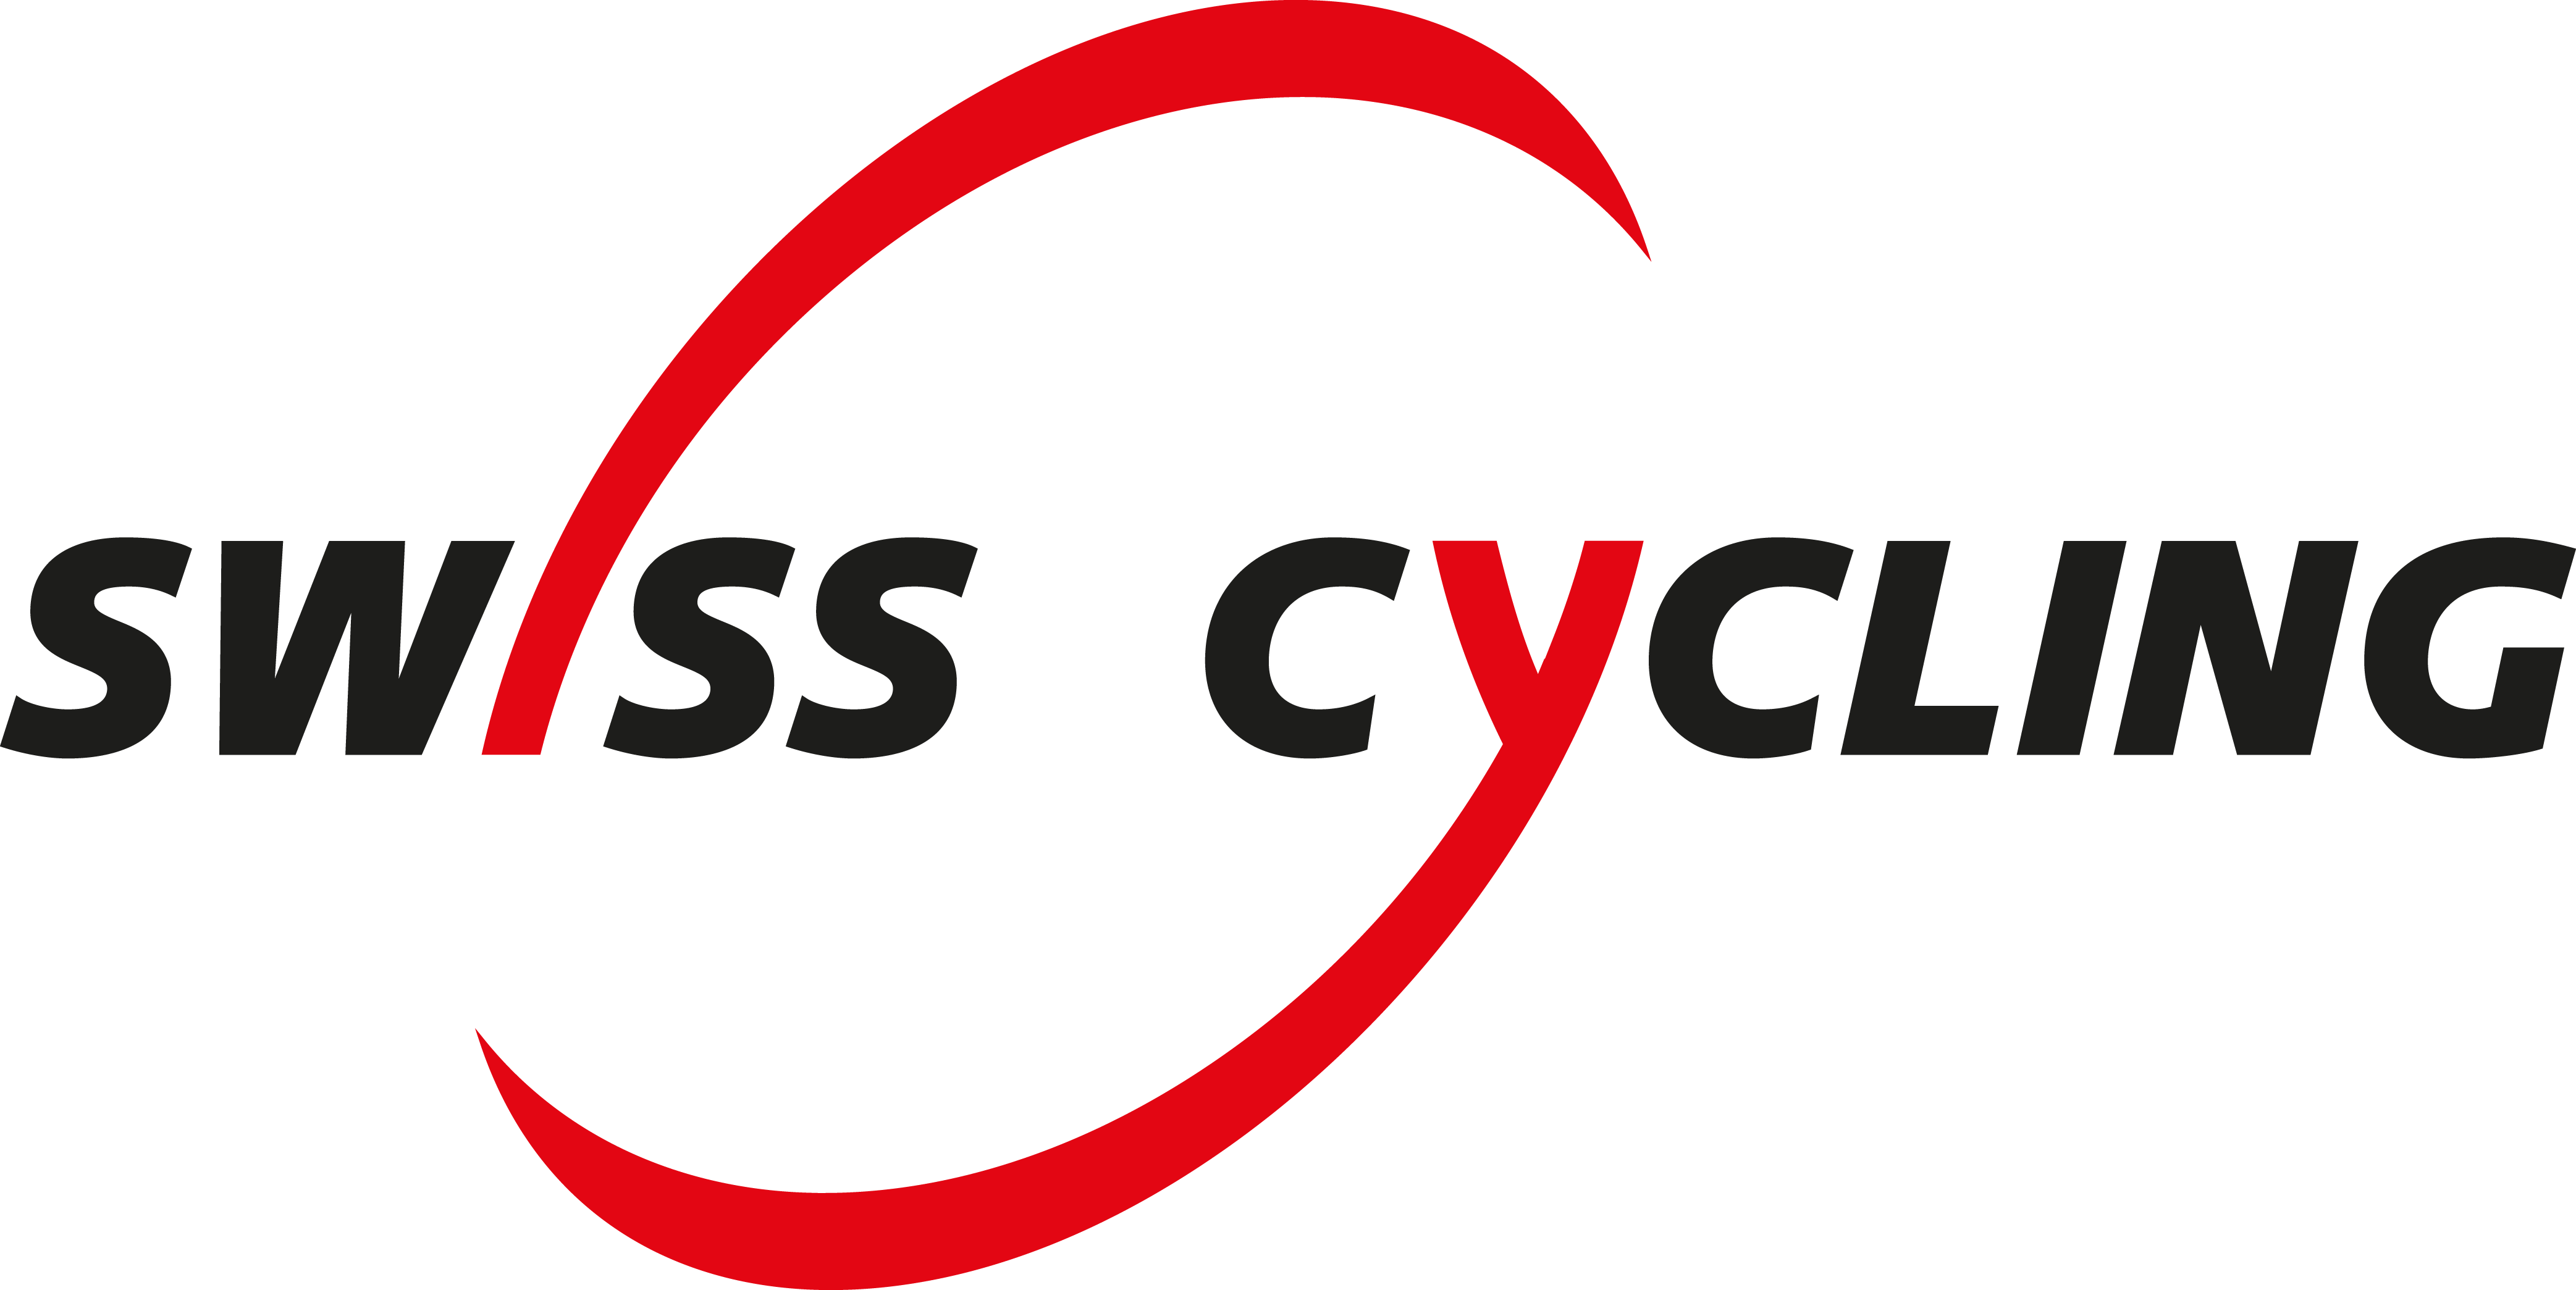 Logo Swiss Cycling